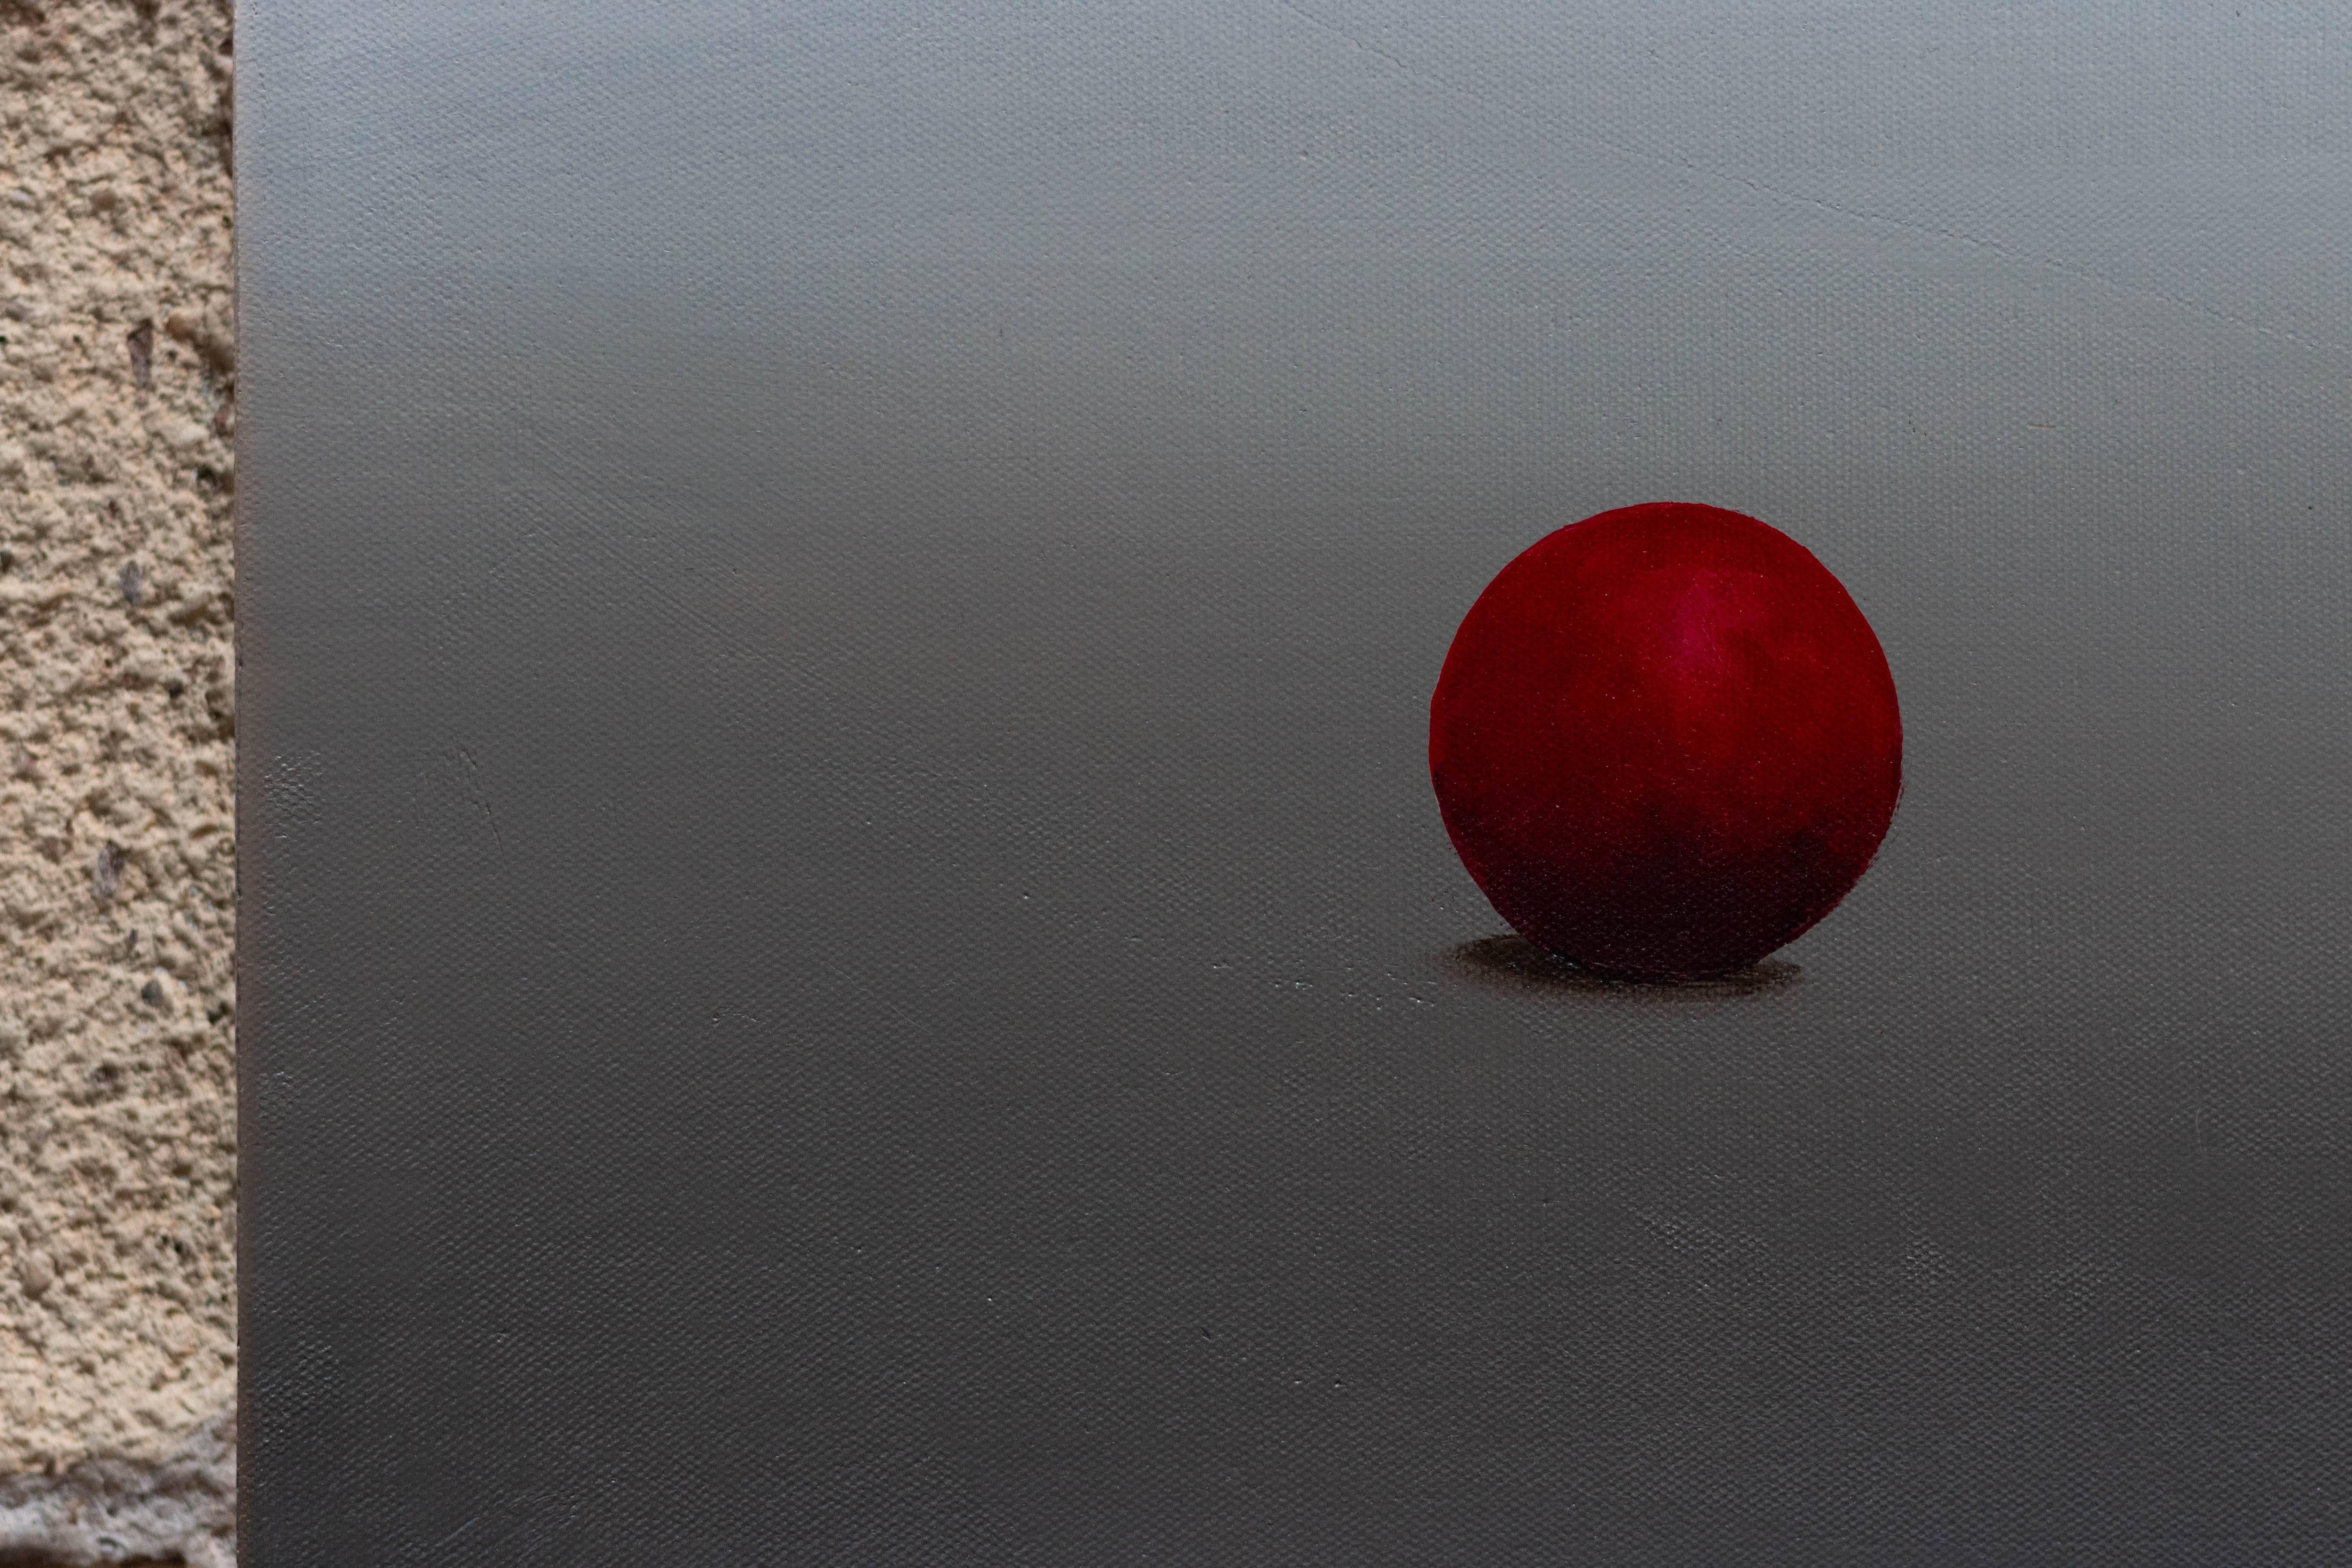 Stillness/Red - Painting by Marketa Sivek